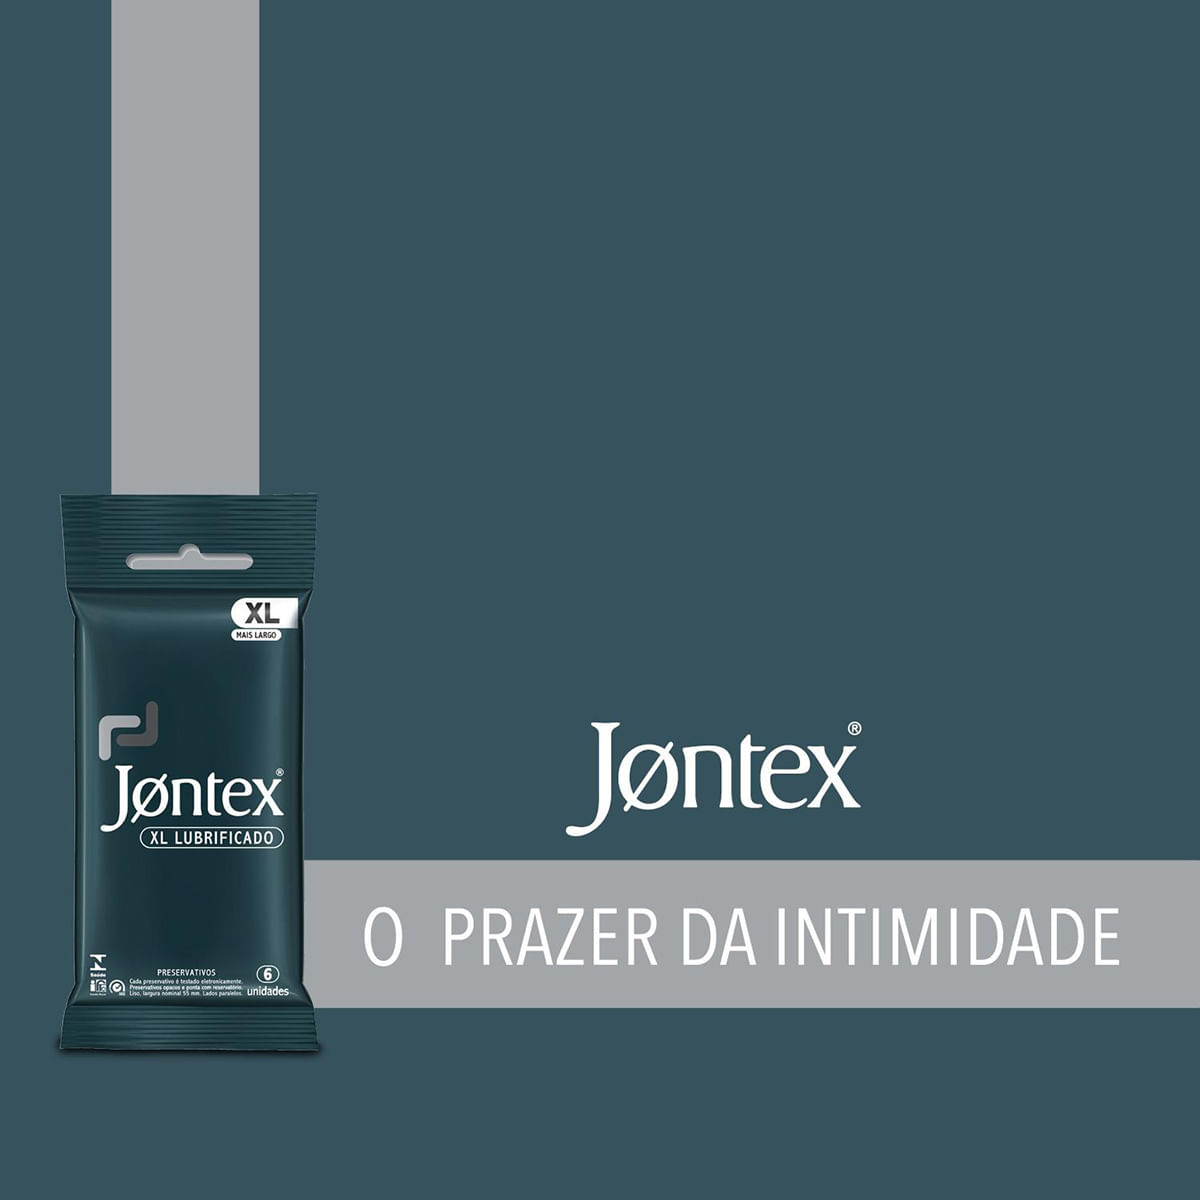 Preservativos Lubrificados XL Lubrificado com 6 unidades Jontex